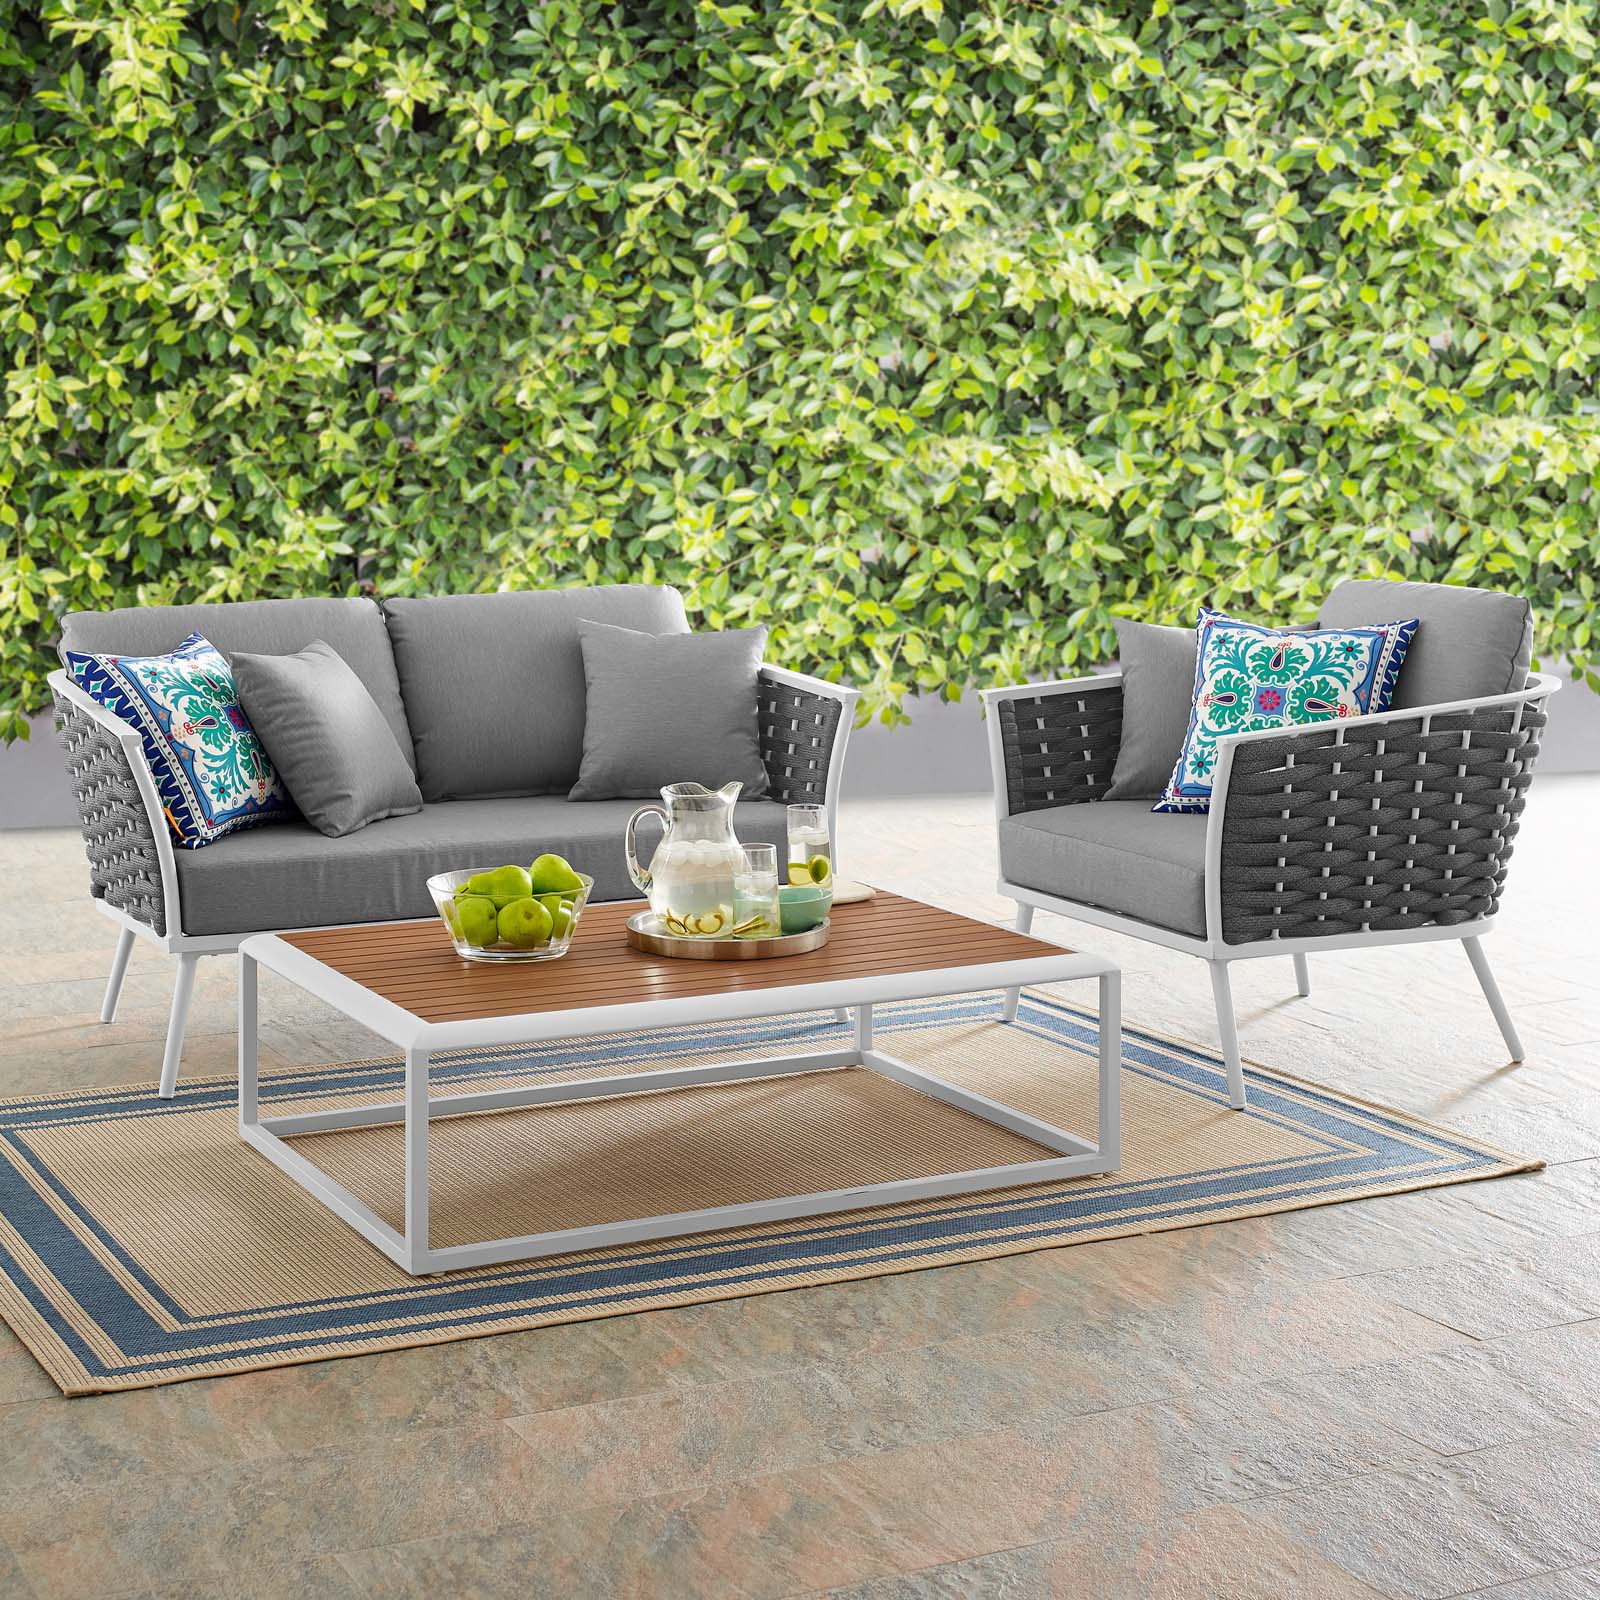 Modern Contemporary Urban Design Outdoor Patio Balcony Garden Furniture Lounge Chair and Sofa Set, Fabric Aluminium, White Grey Gray - image 2 of 8